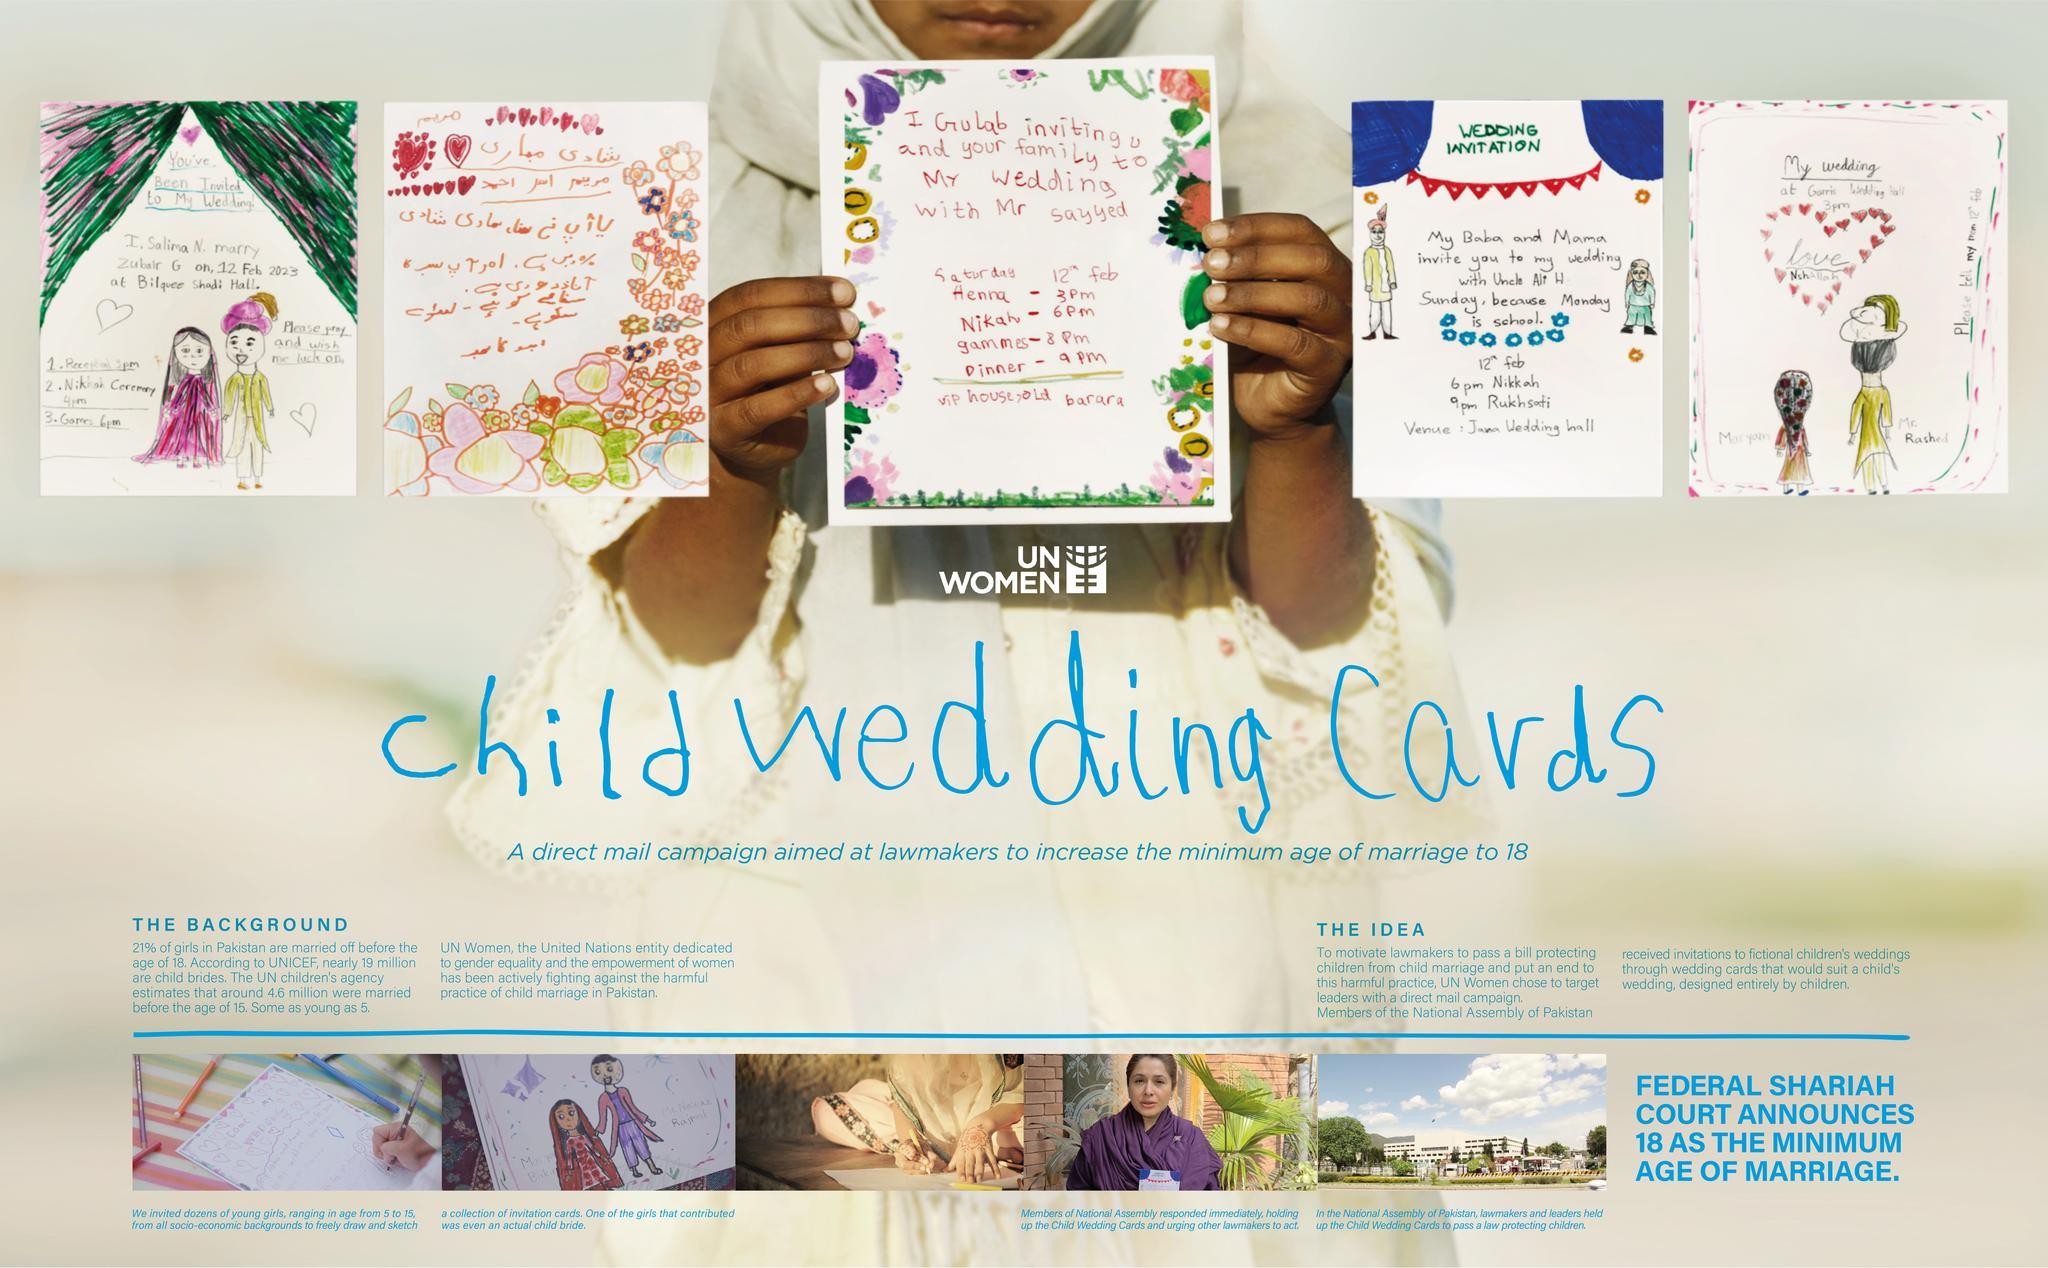 CHILD WEDDING CARDS